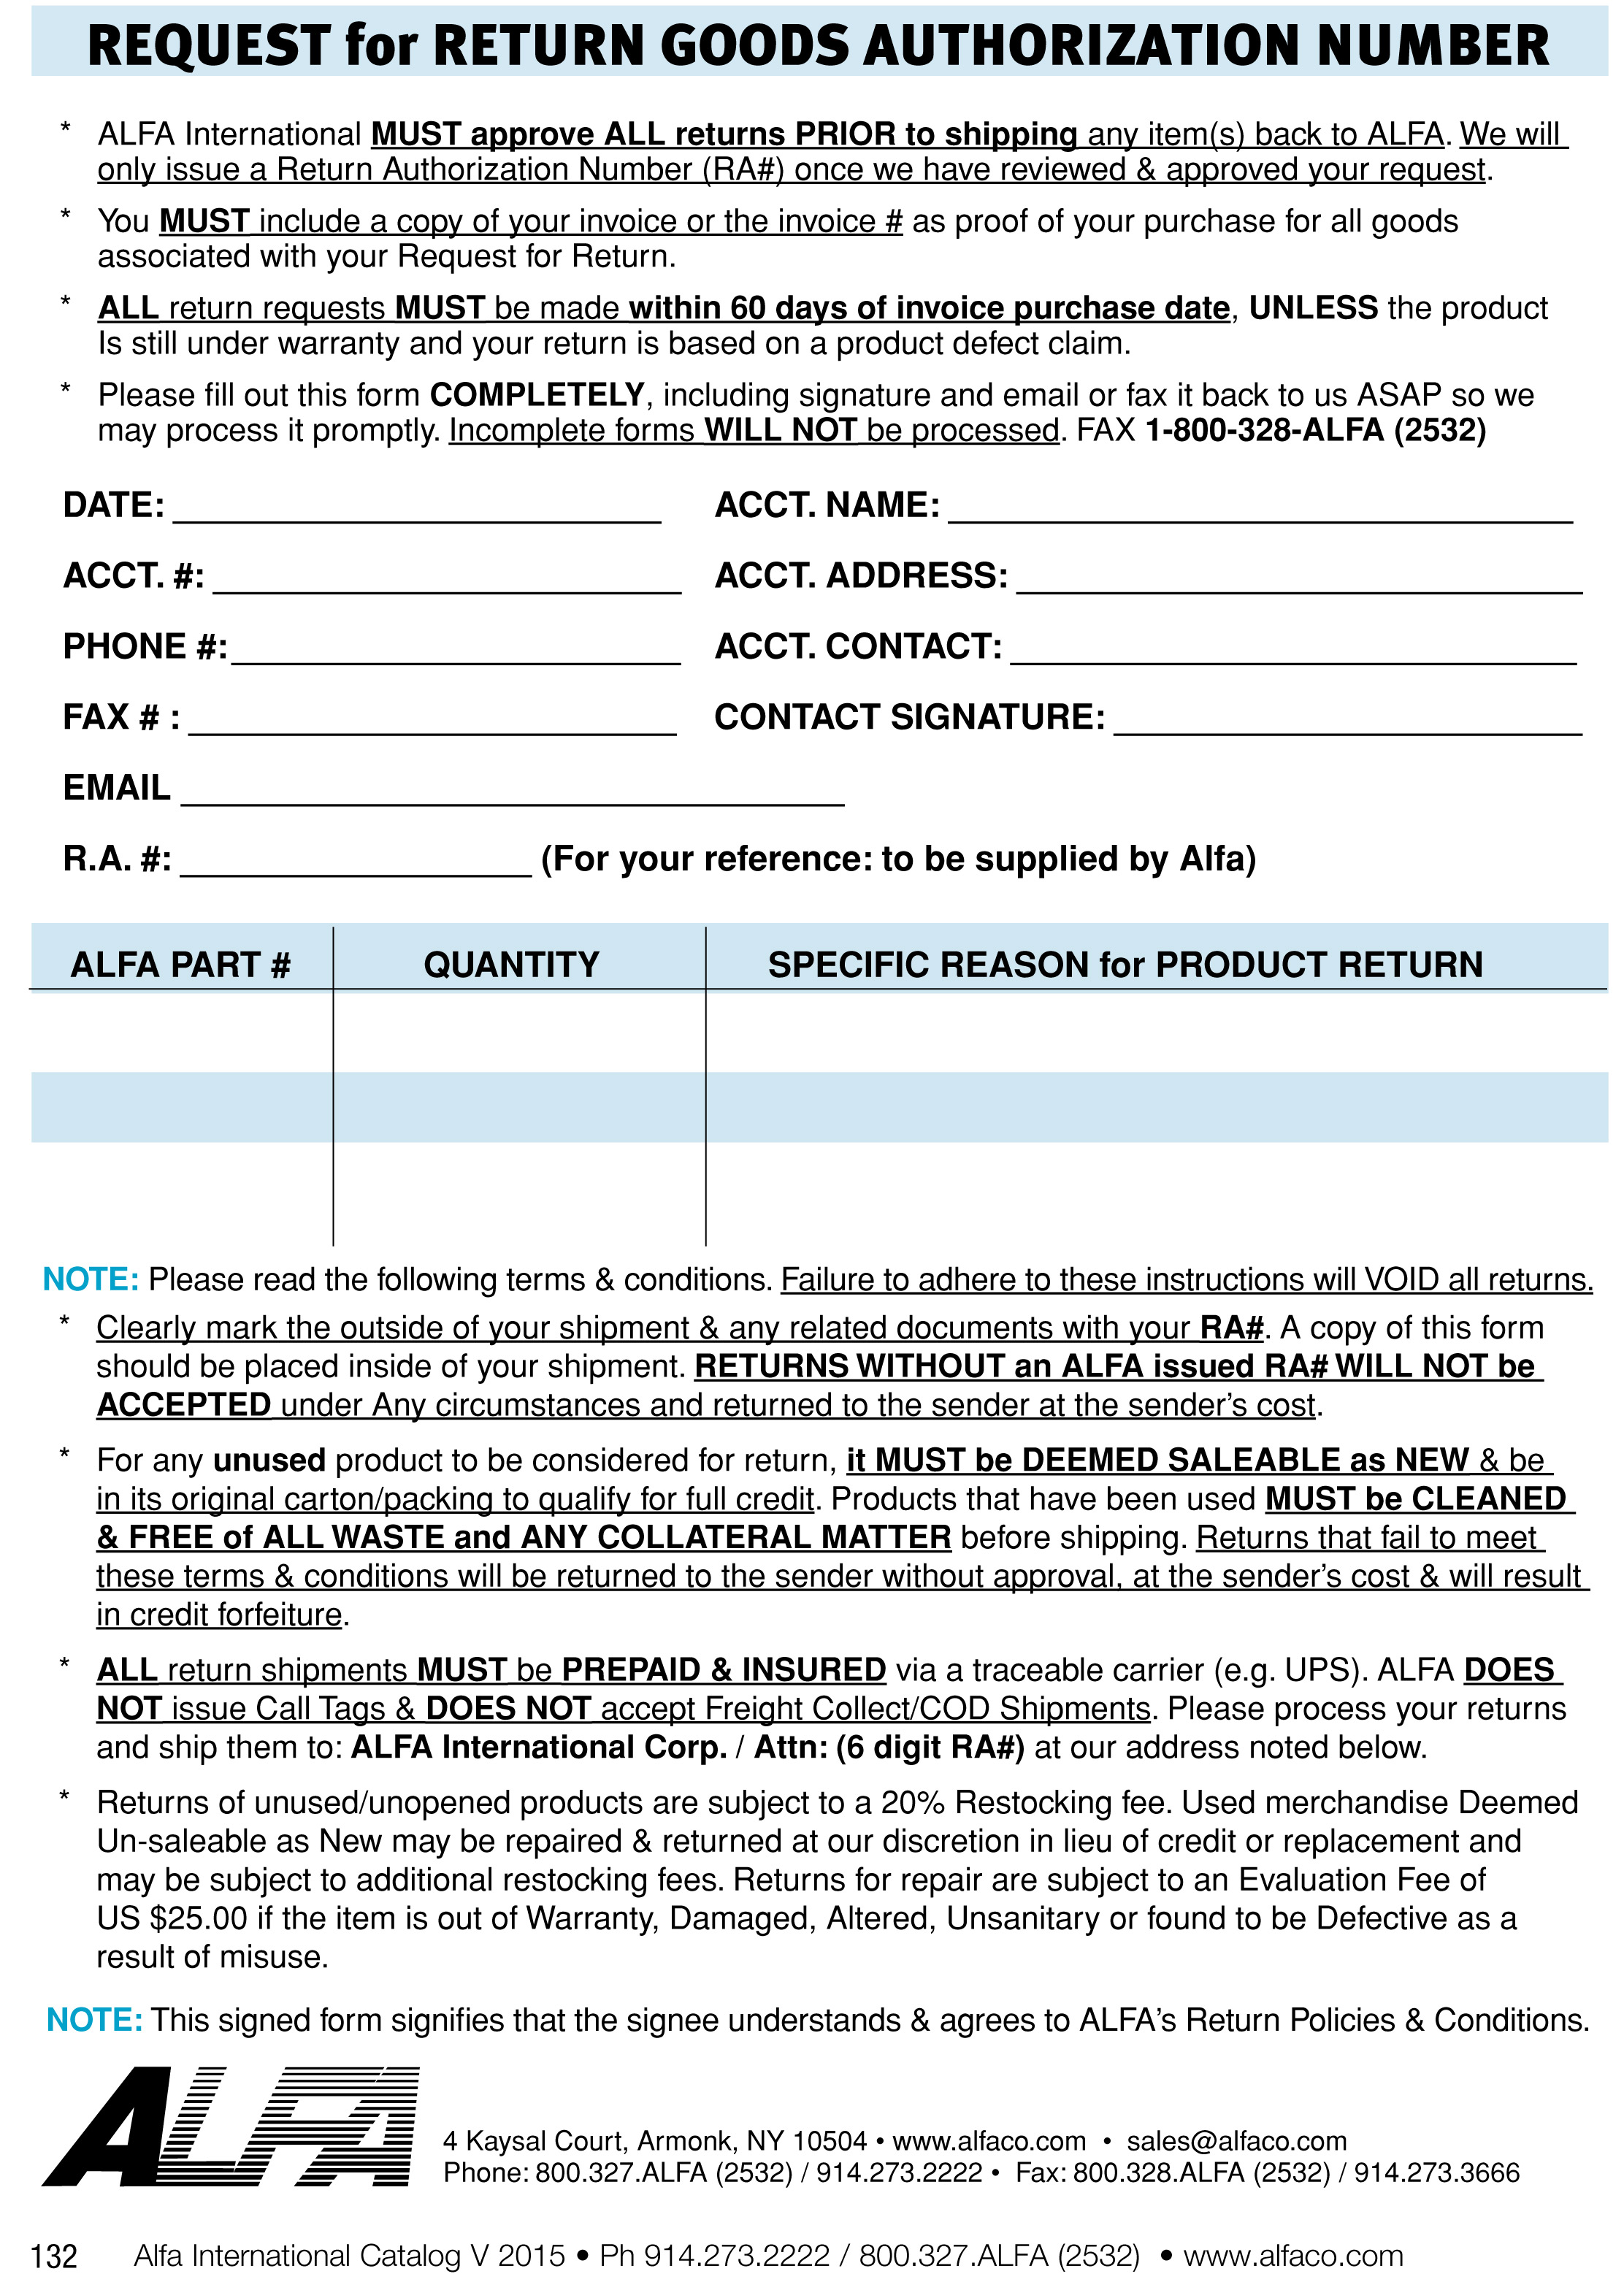 ALFA-Catalog-Return-Authorization-Form